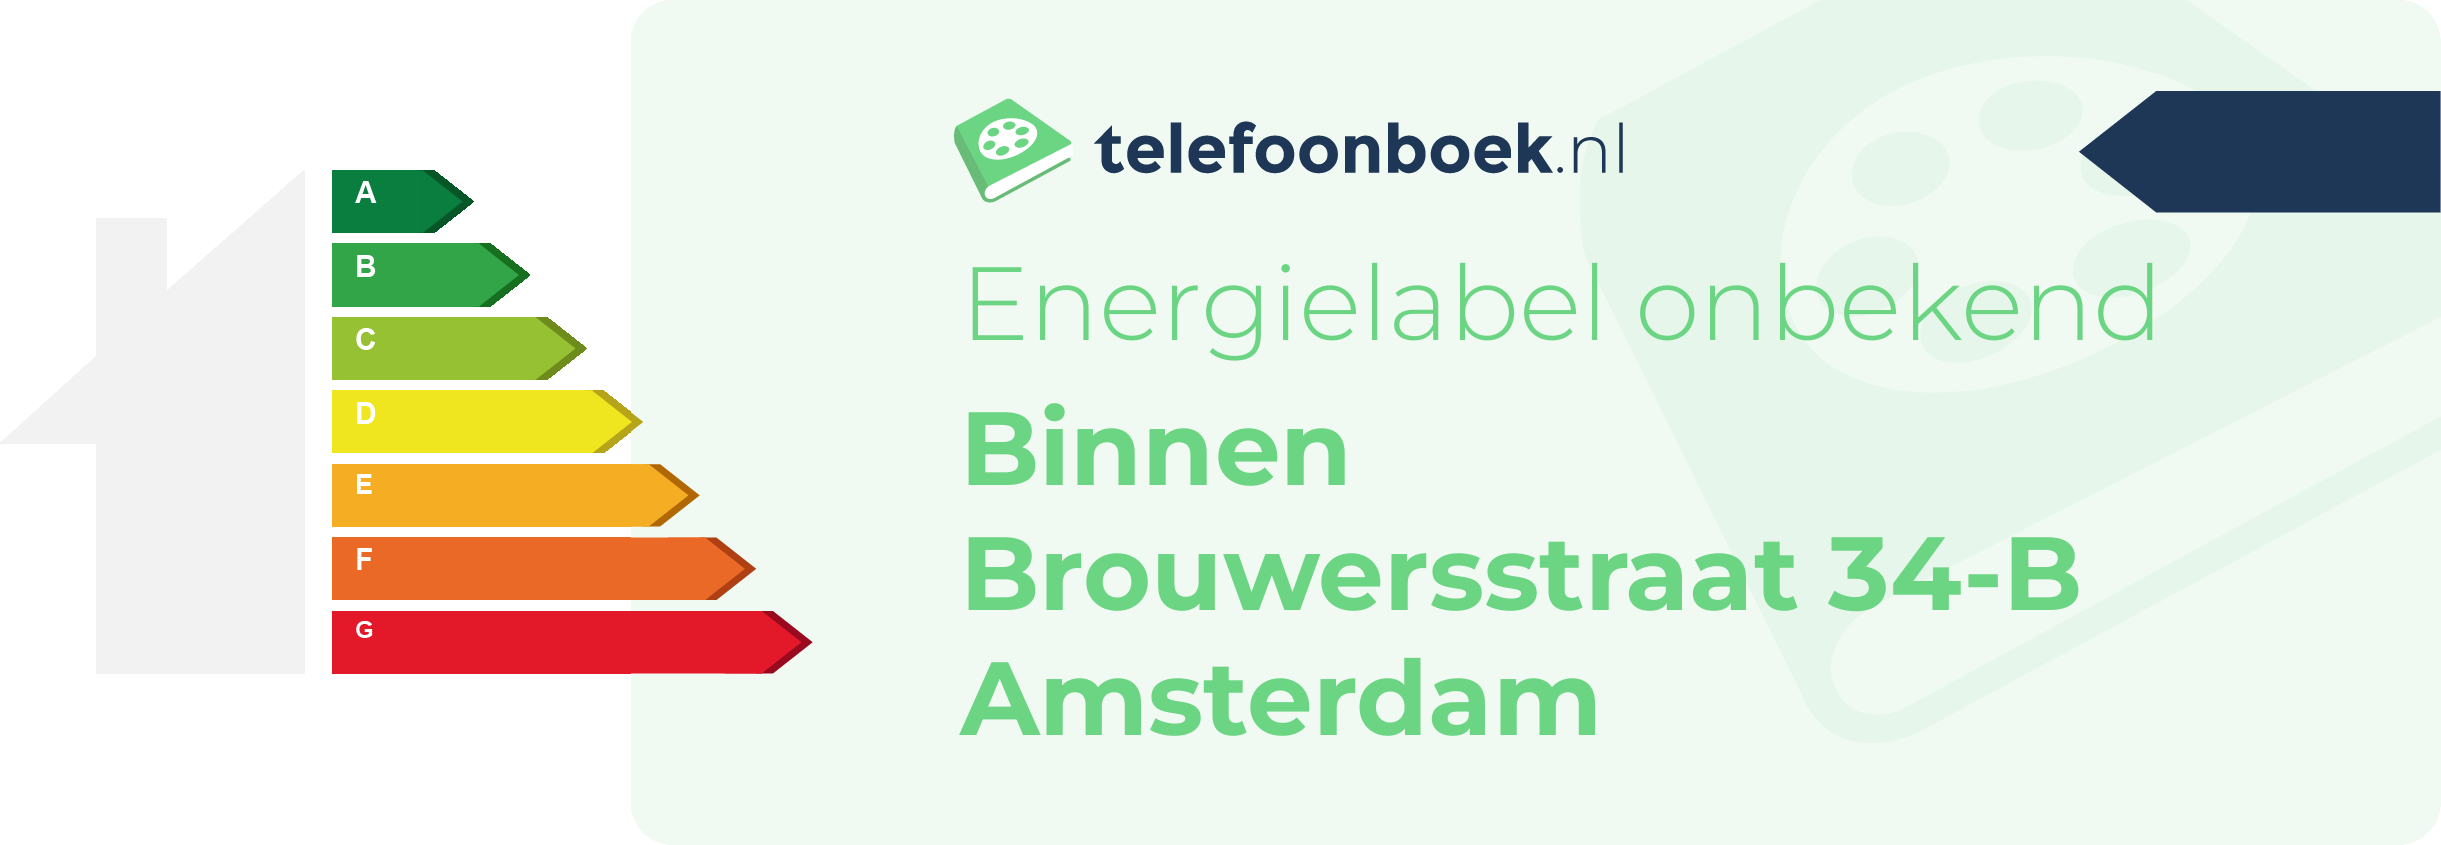 Energielabel Binnen Brouwersstraat 34-B Amsterdam